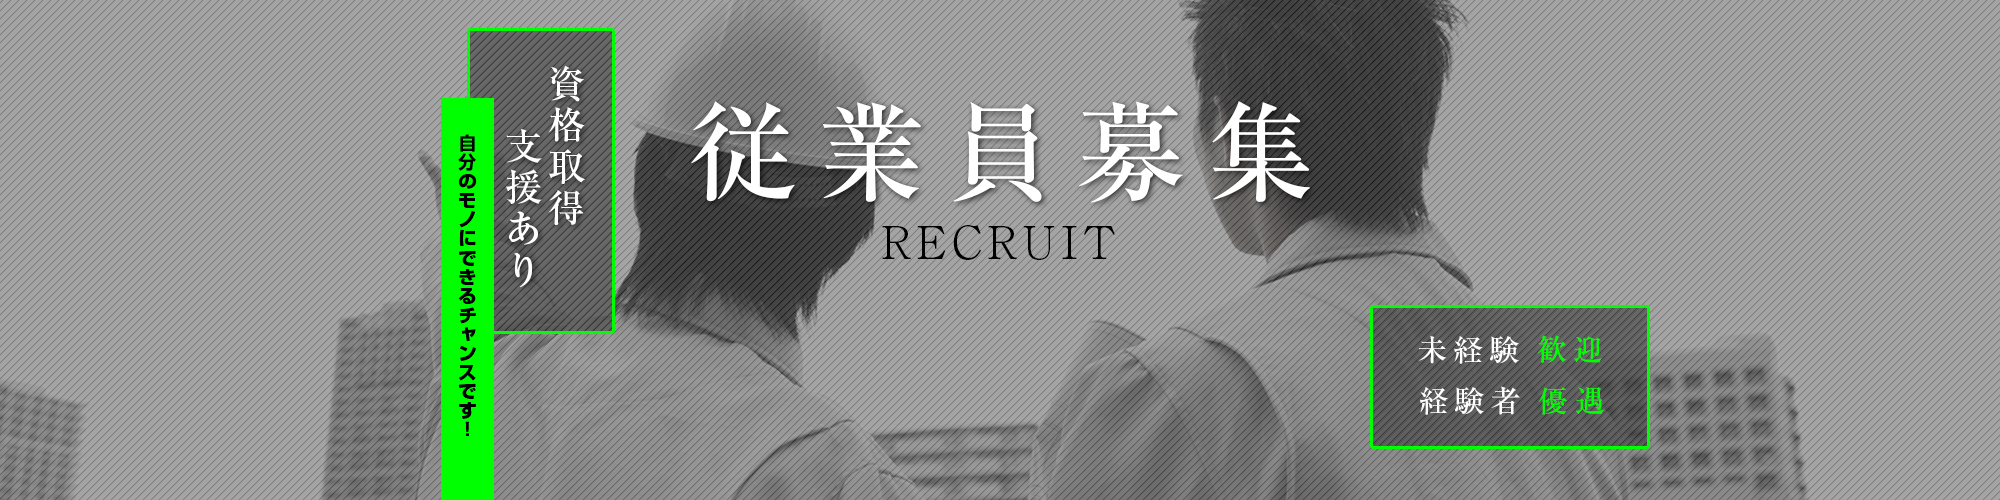 0:banner_recruit